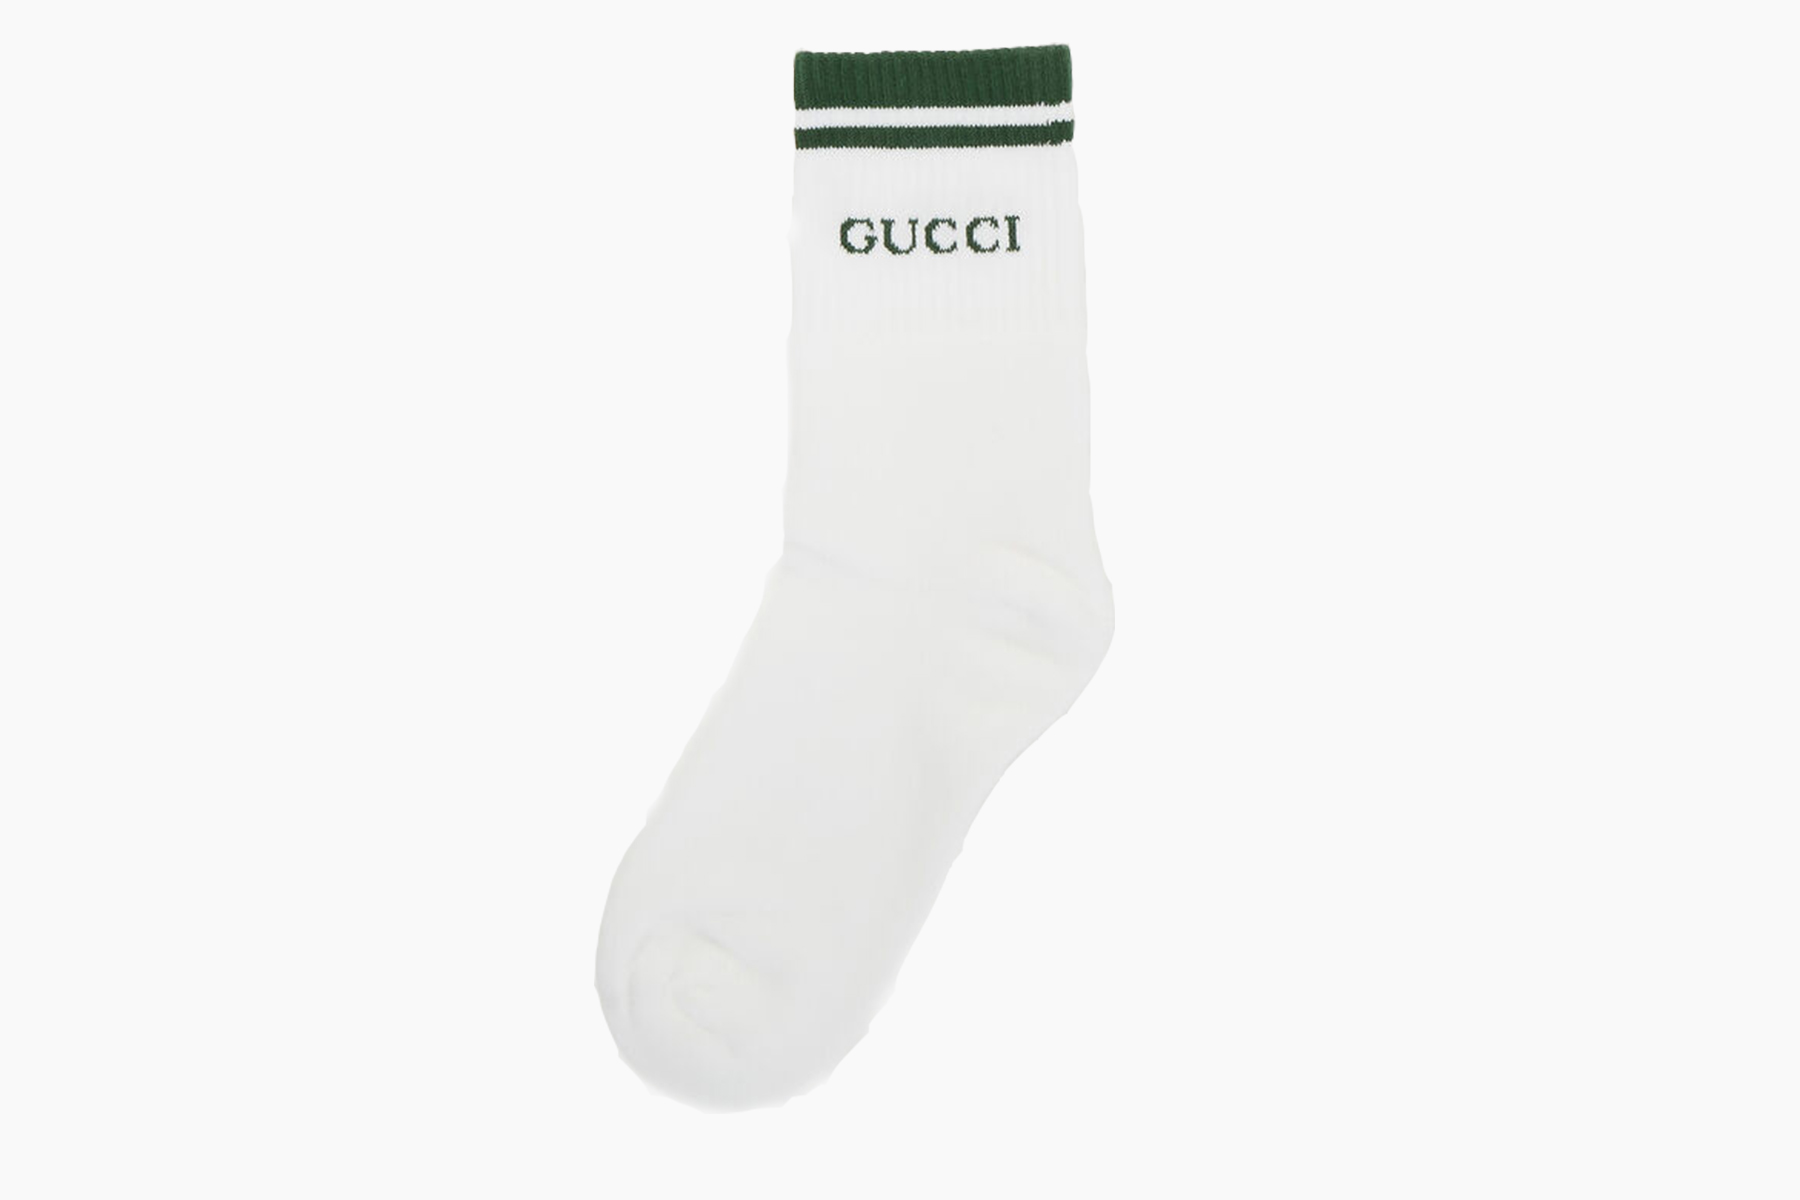 gucci socks price